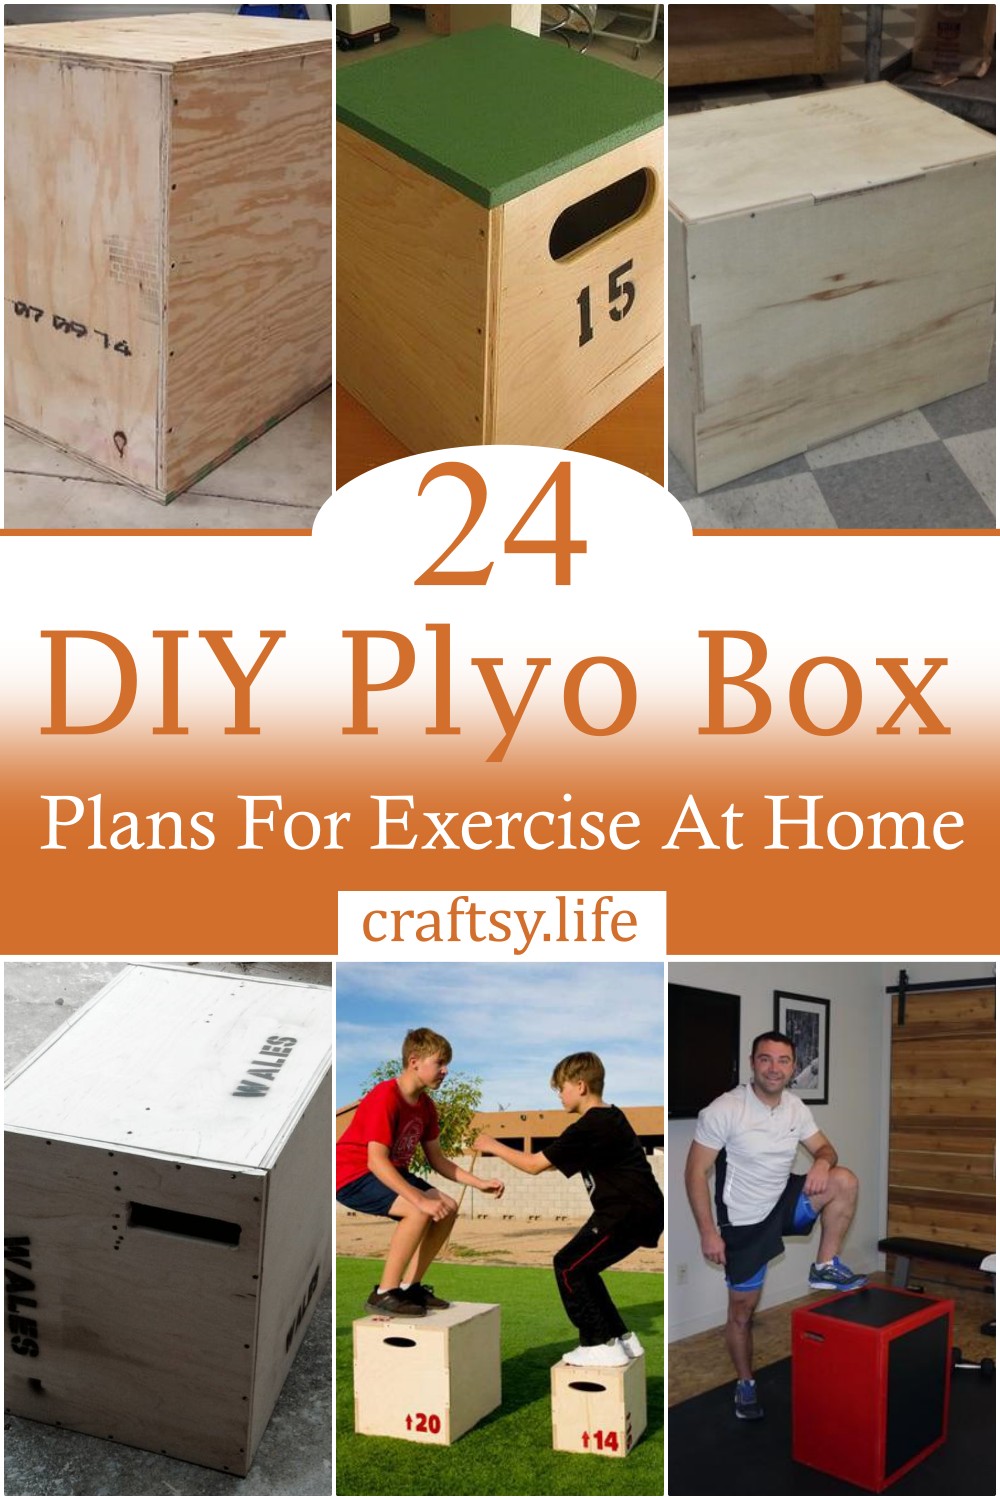 DIY Plyo Box Plans